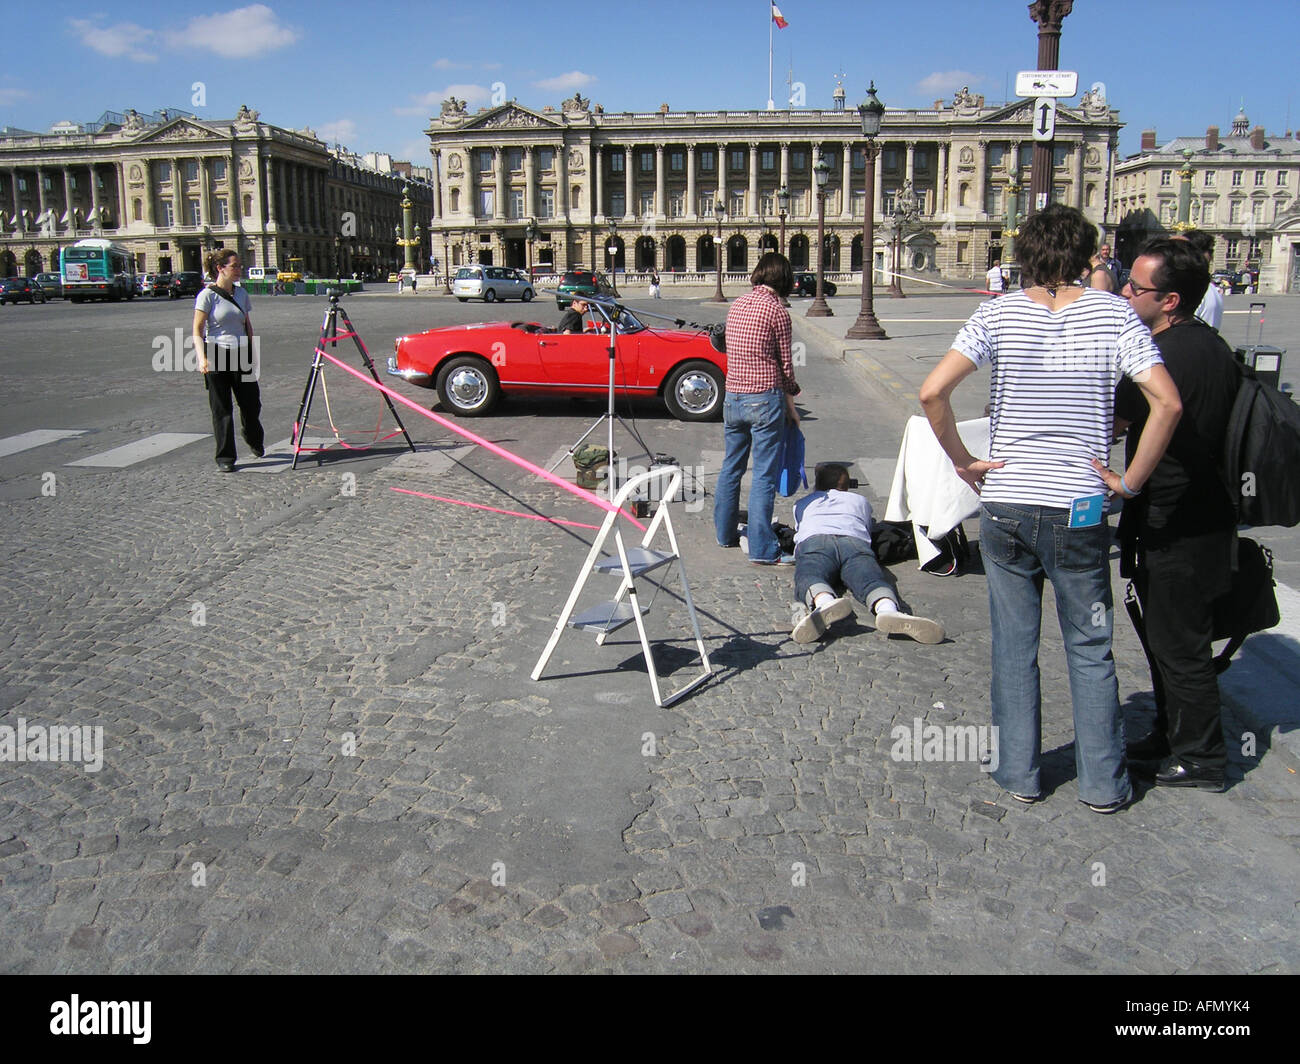 Alfa Romeo Giulietta Spider in professional magazine photoshoot at Place de la Concorde Paris France Stock Photo